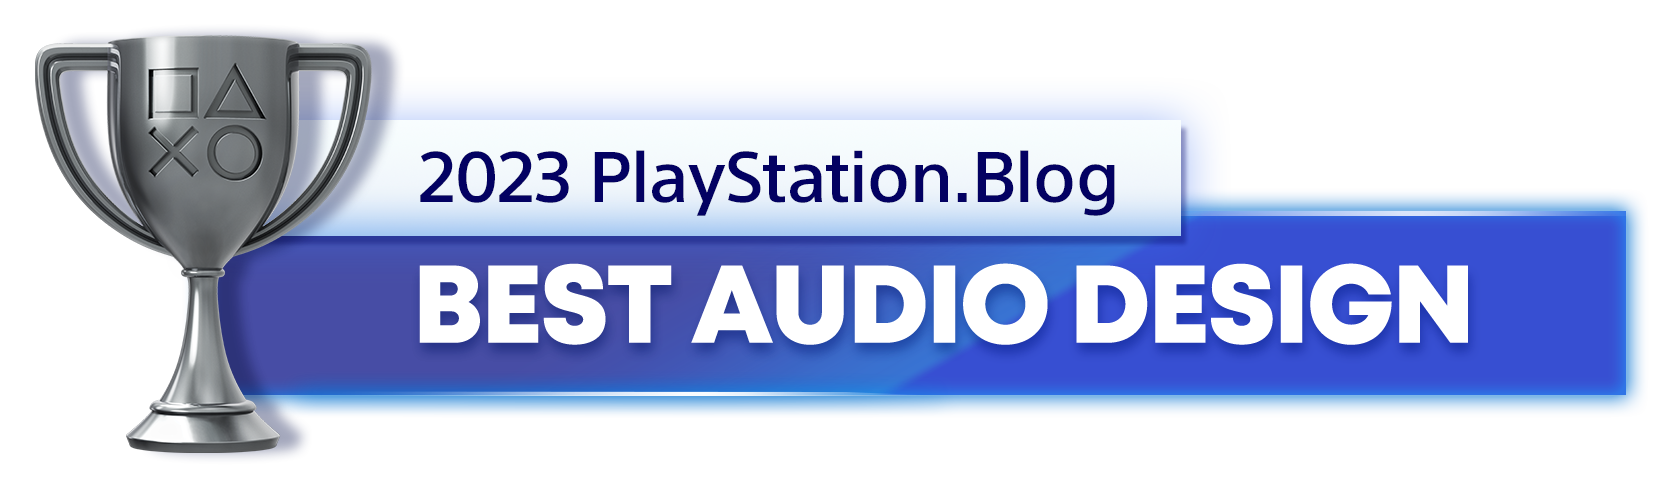  "Silver Trophy for the 2023 PlayStation Blog Best Audio Design Winner"